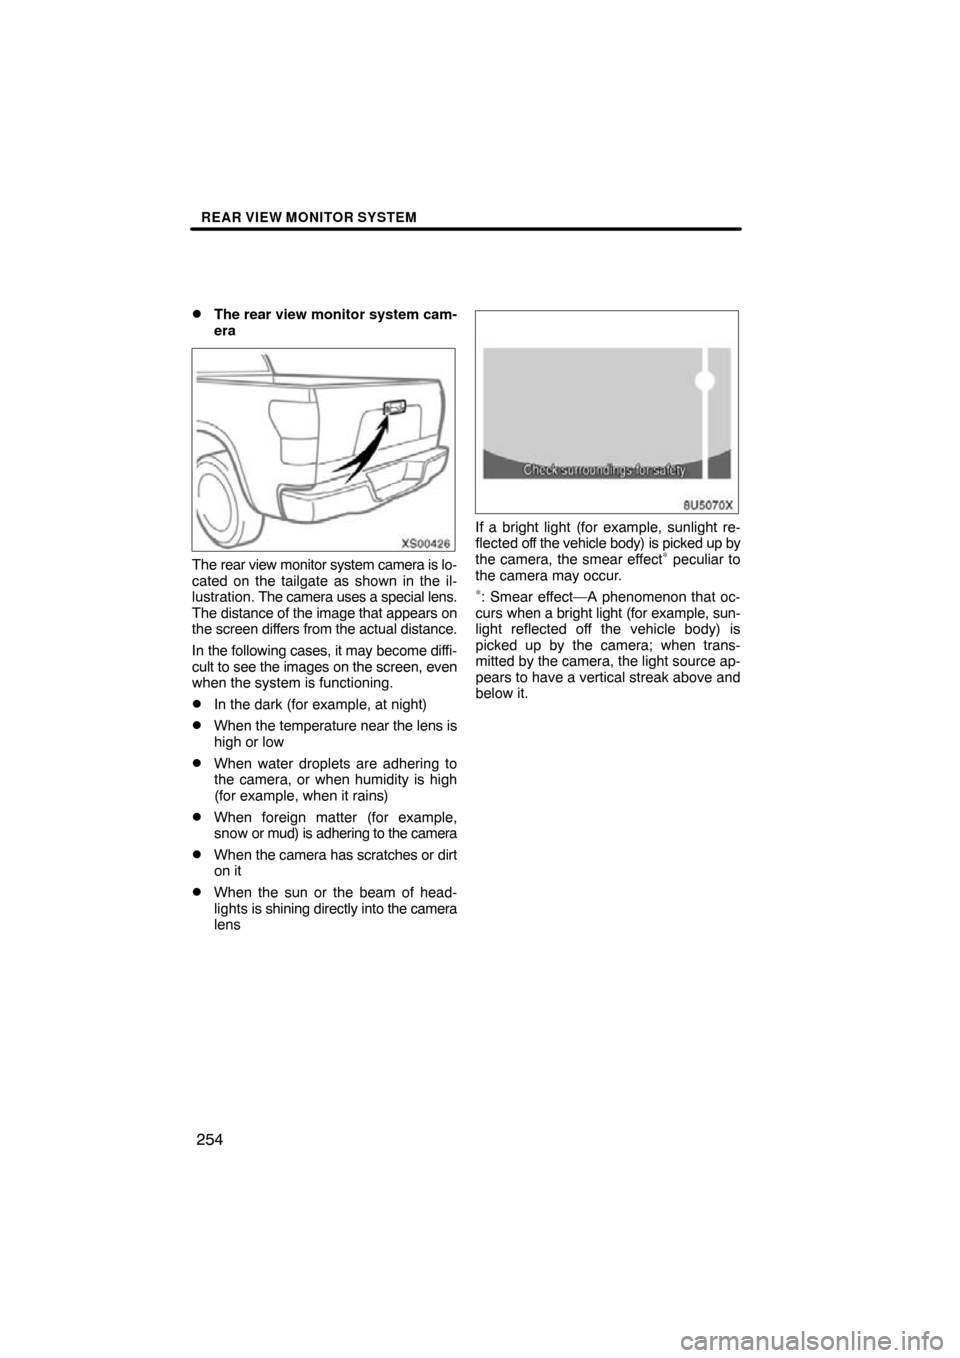 TOYOTA TUNDRA 2009 2.G Navigation Manual REAR VIEW MONITOR SYSTEM
254

The rear view monitor system cam-
era
XS00426
The rear view monitor system camera is lo-
cated on the tailgate as shown in the il-
lustration. 
The camera uses a special